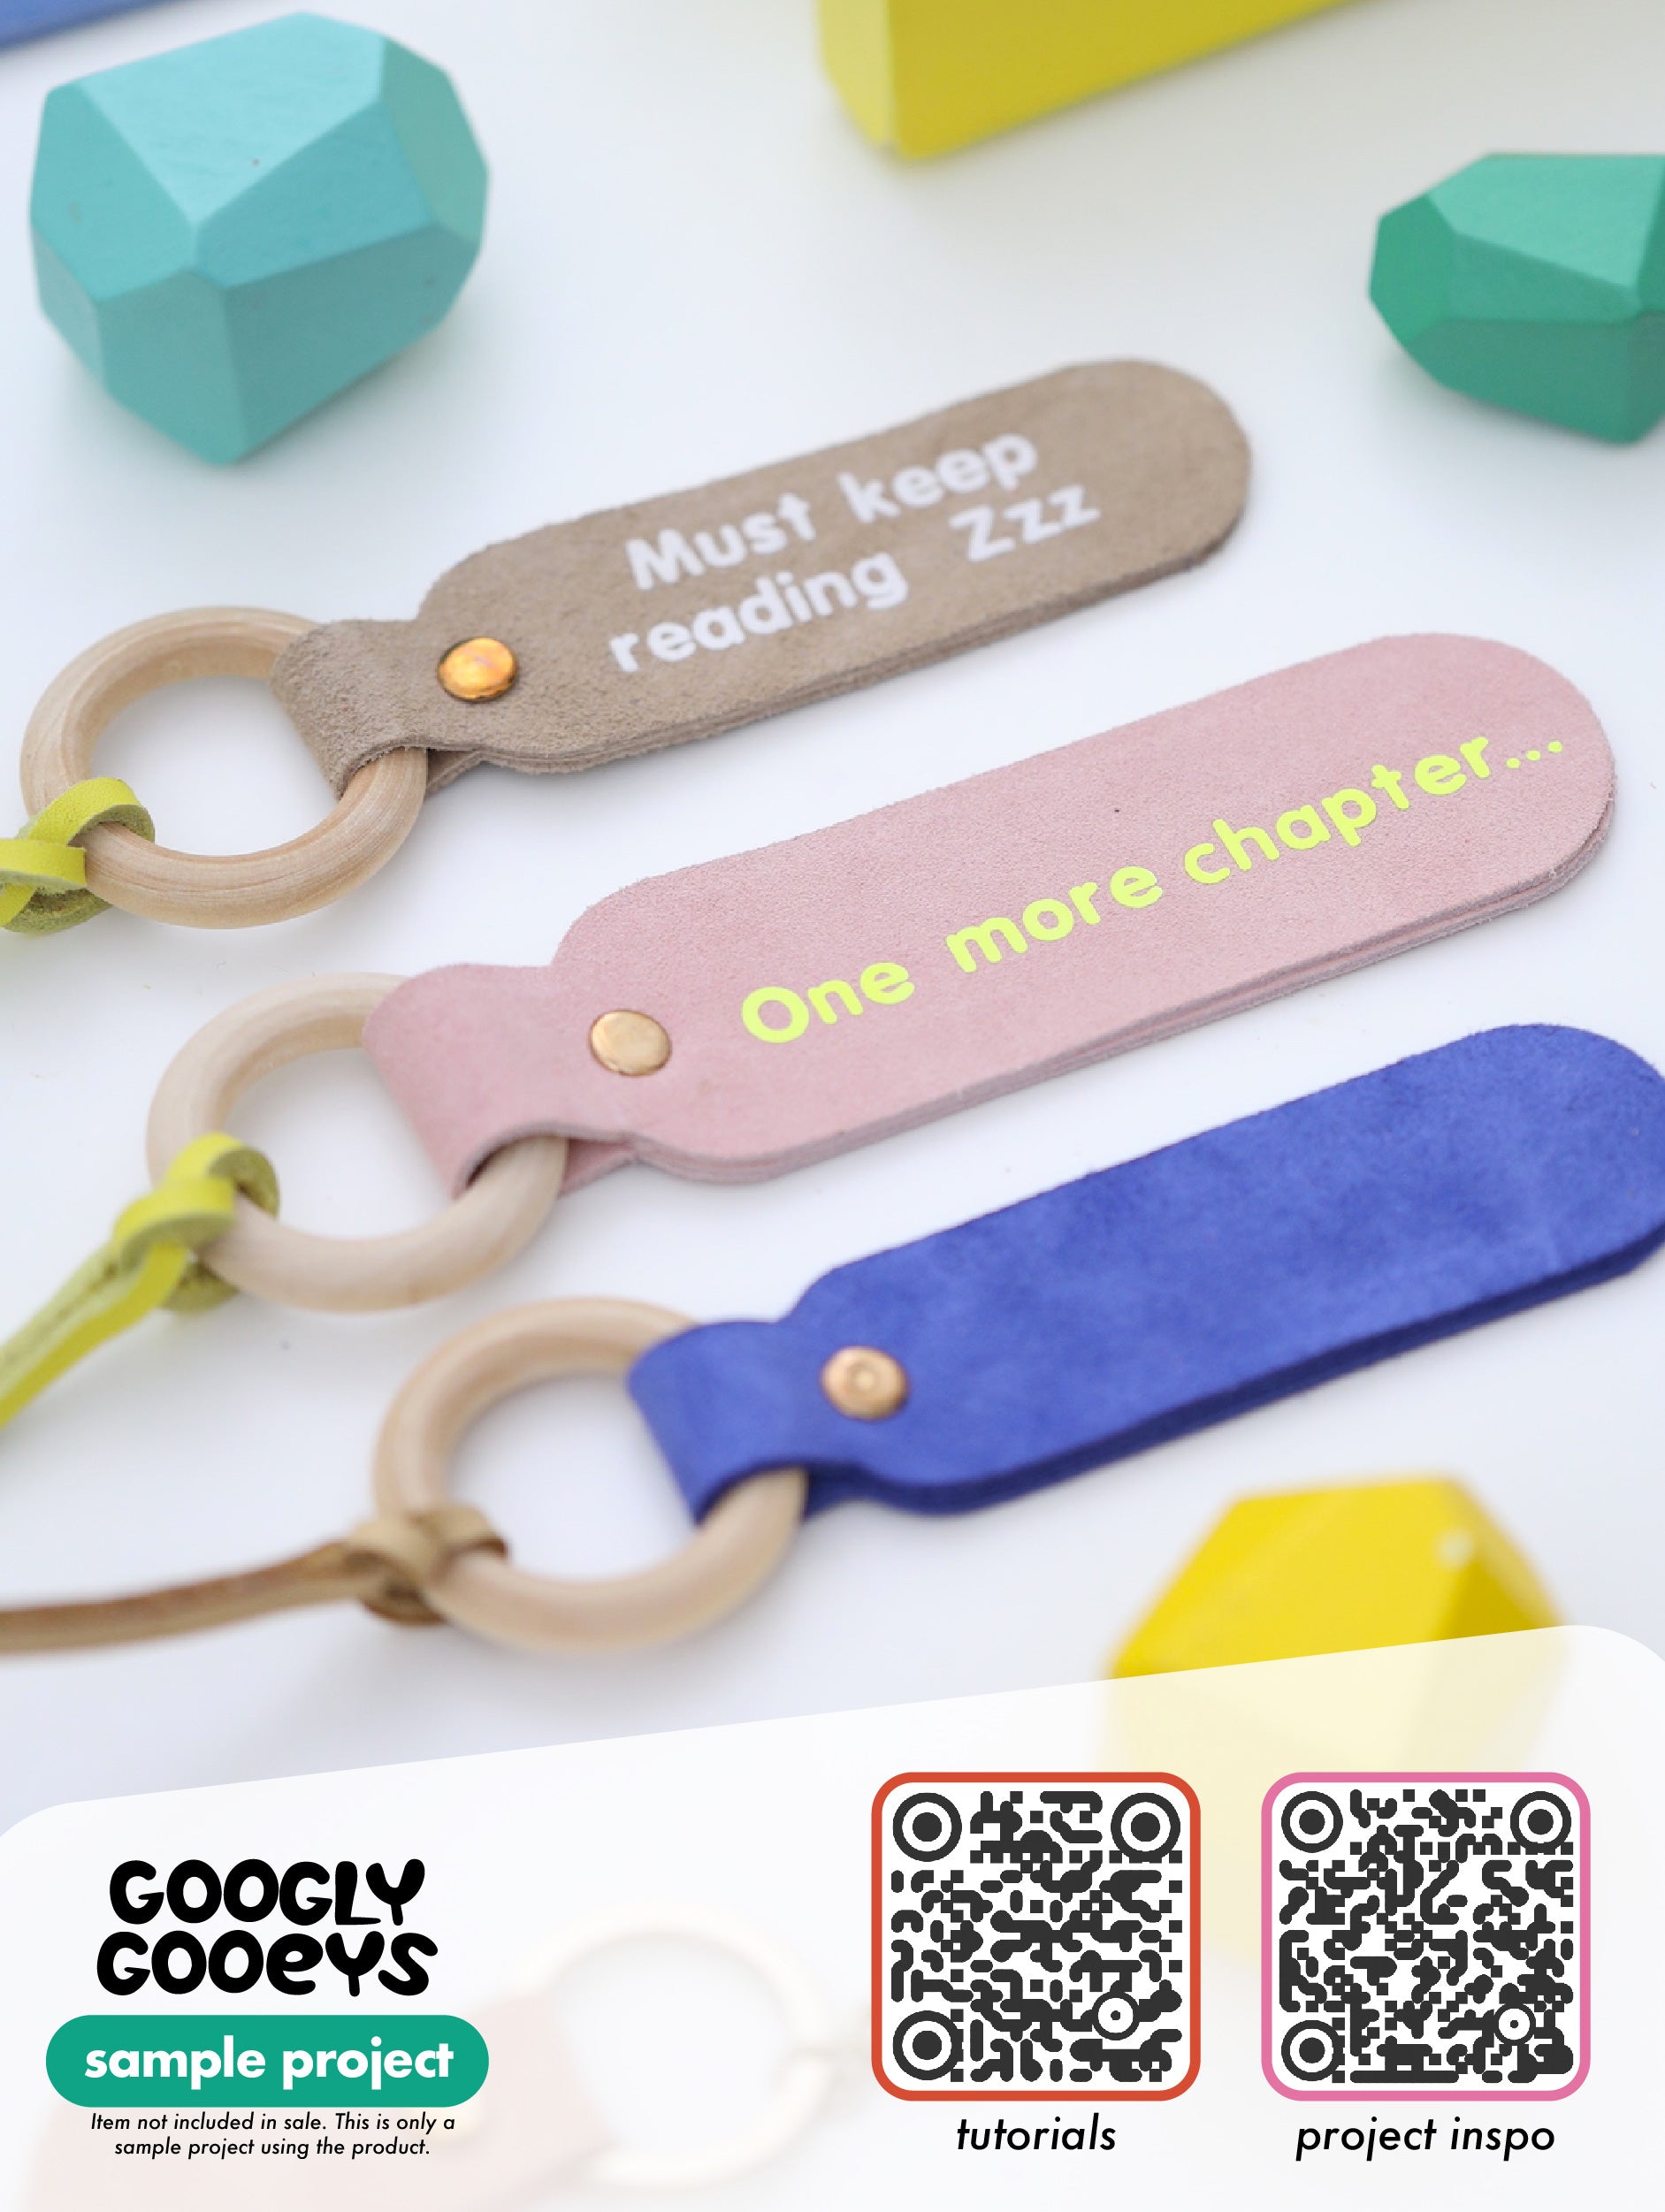 Googly Gooeys Double Cap Rivet Remache 7mm | DIY Souvenir Accessories (40 pairs) Gold